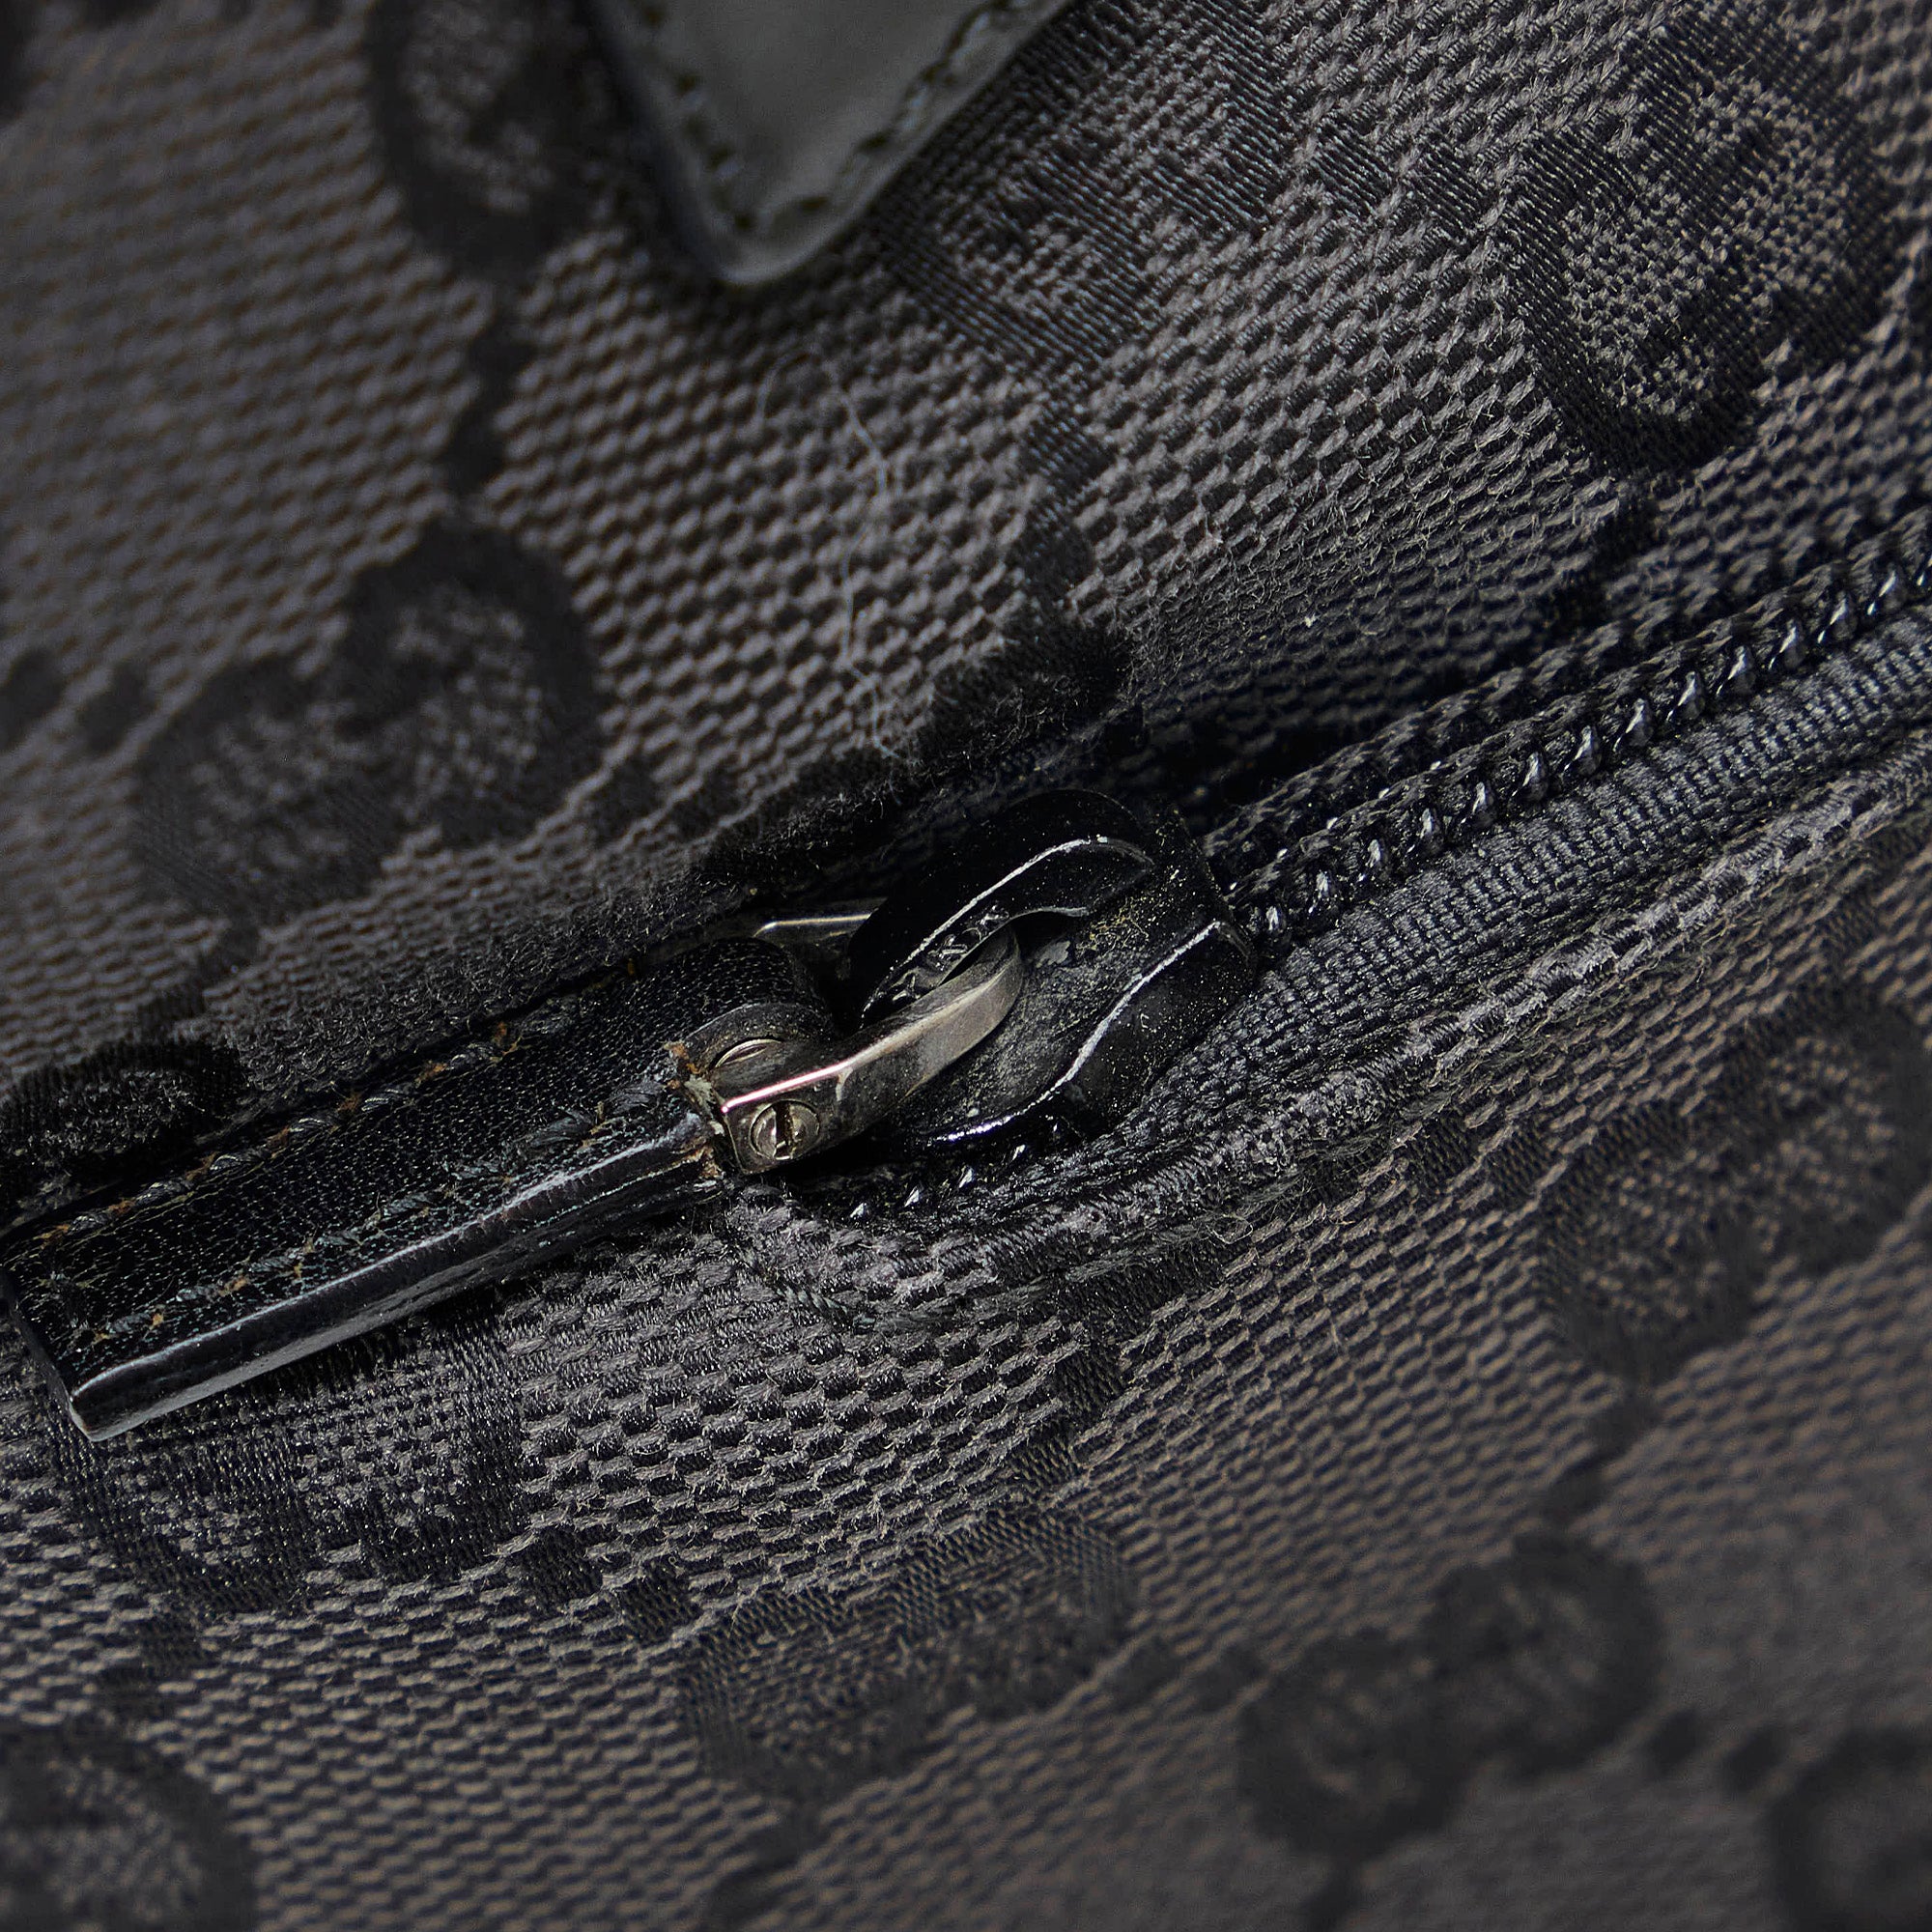 Black Gucci GG Canvas Shoulder Bag, RvceShops Revival